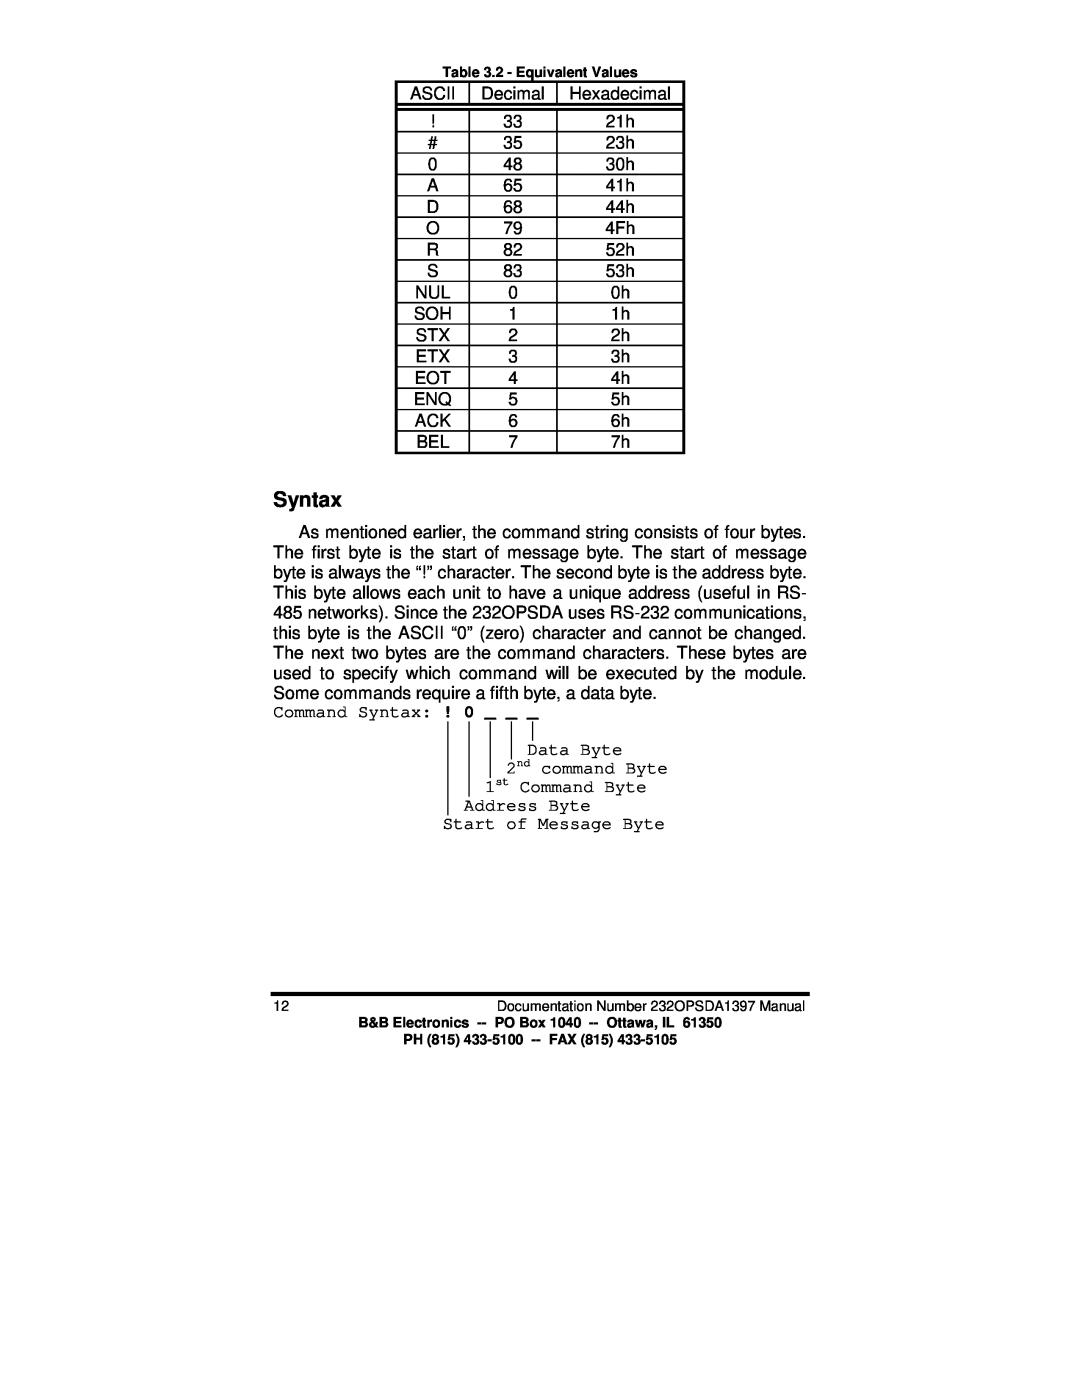 B&B Electronics 232OPSDA manual Syntax 